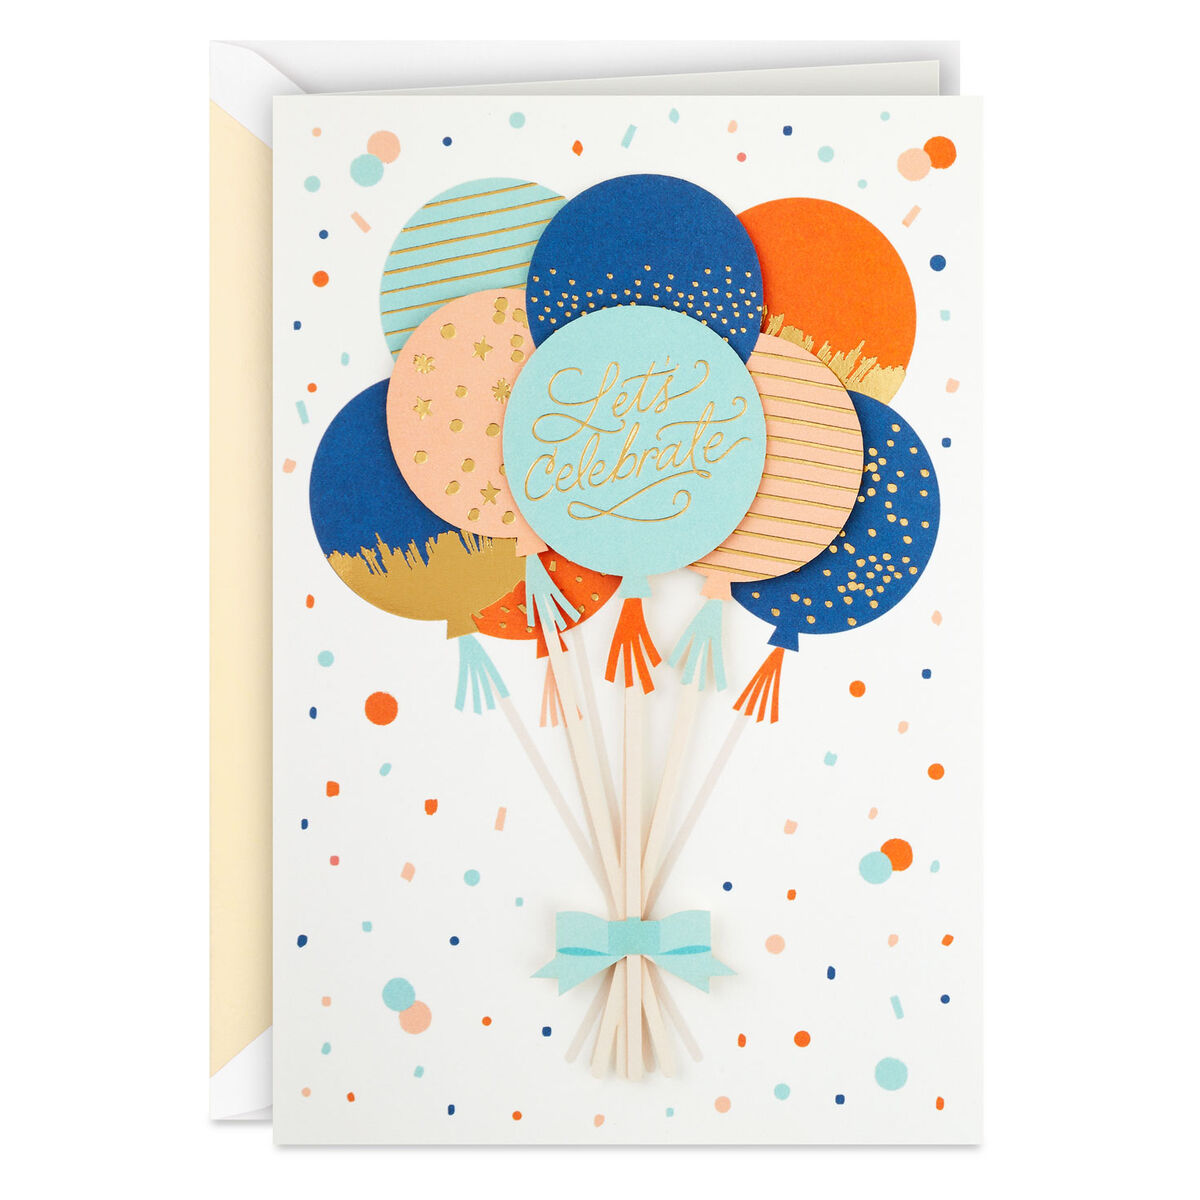 Let's Celebrate Balloons Birthday Card - Greeting Cards - Hallmark